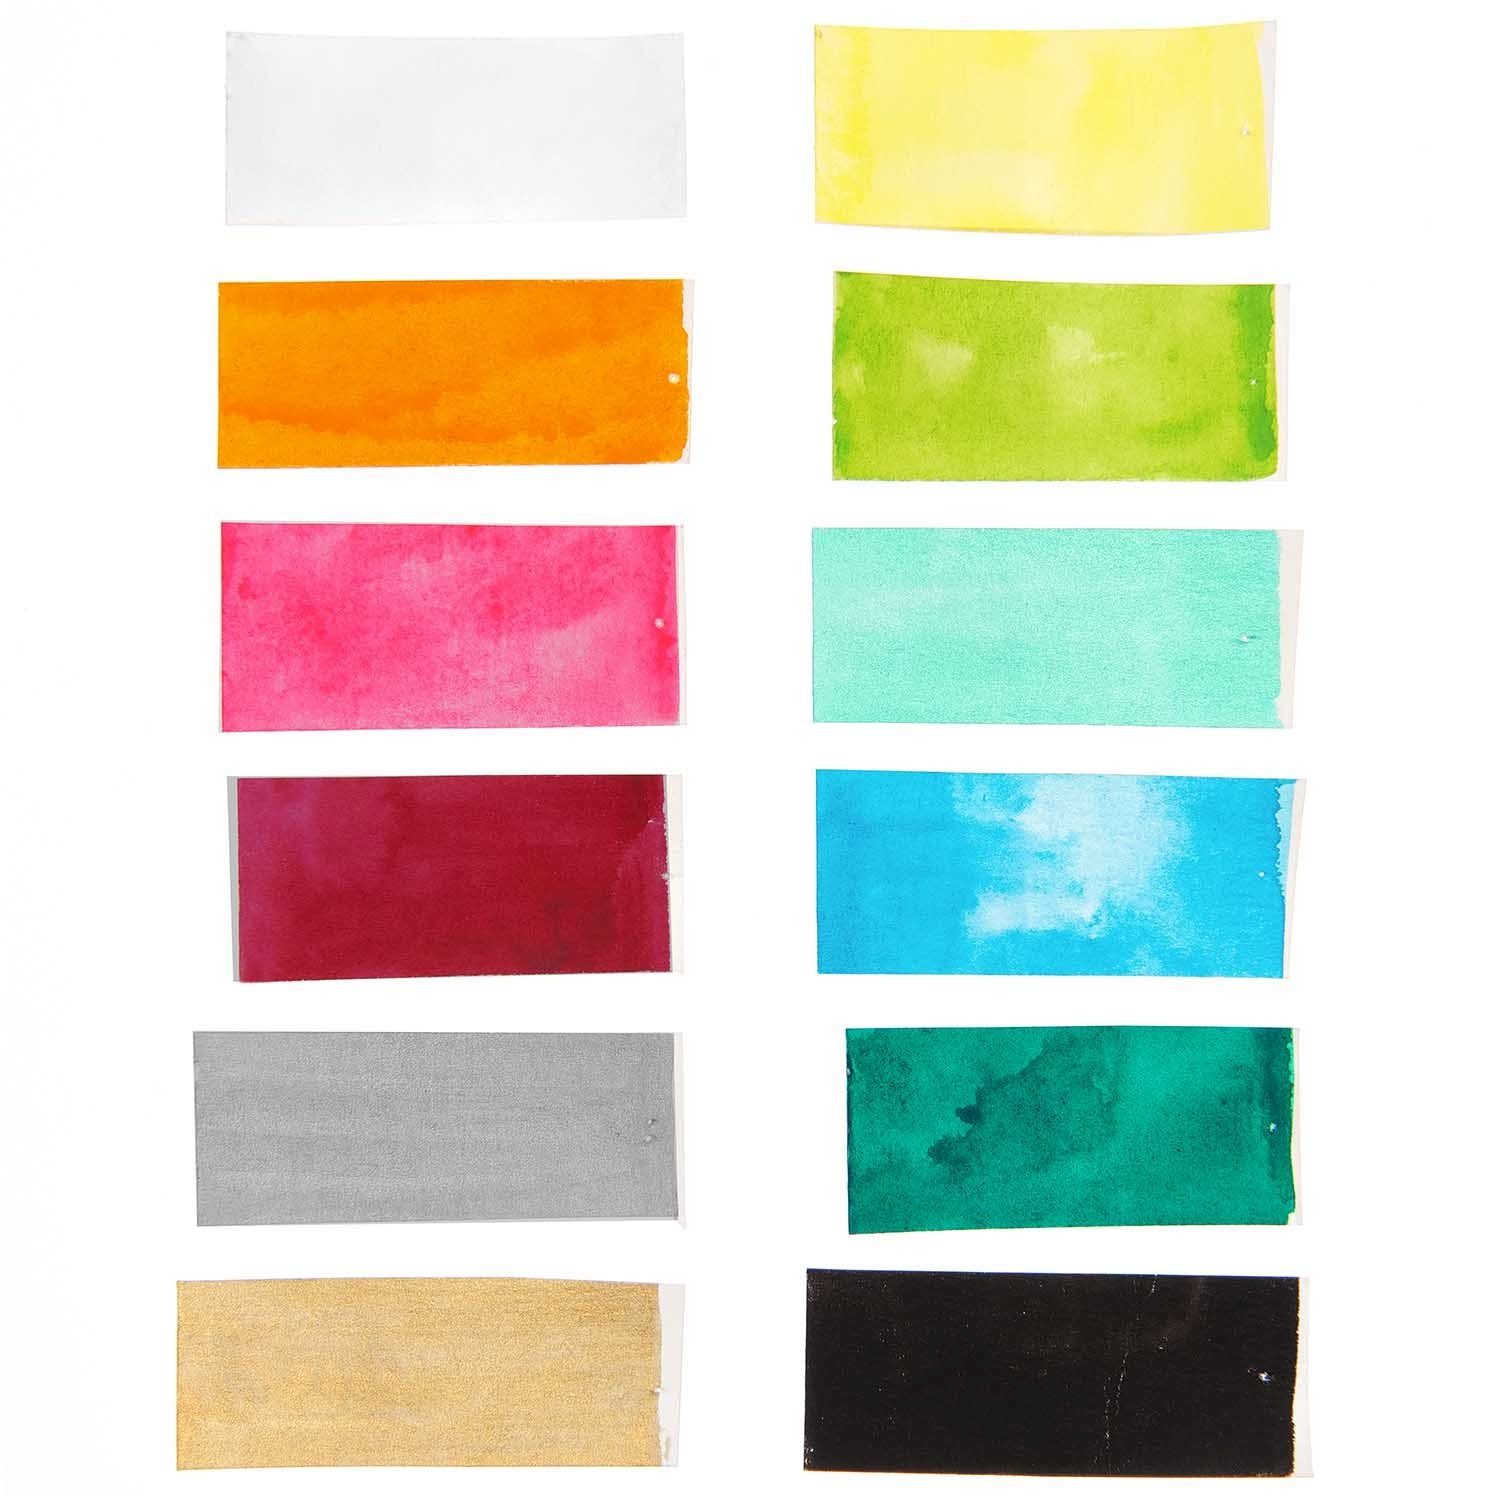 Essential Aquarellfarbe ART cm Farben Design 12 7 Metallkasten x Regenbogen Aquarellfarben, 12,5 Rico cm inklusive